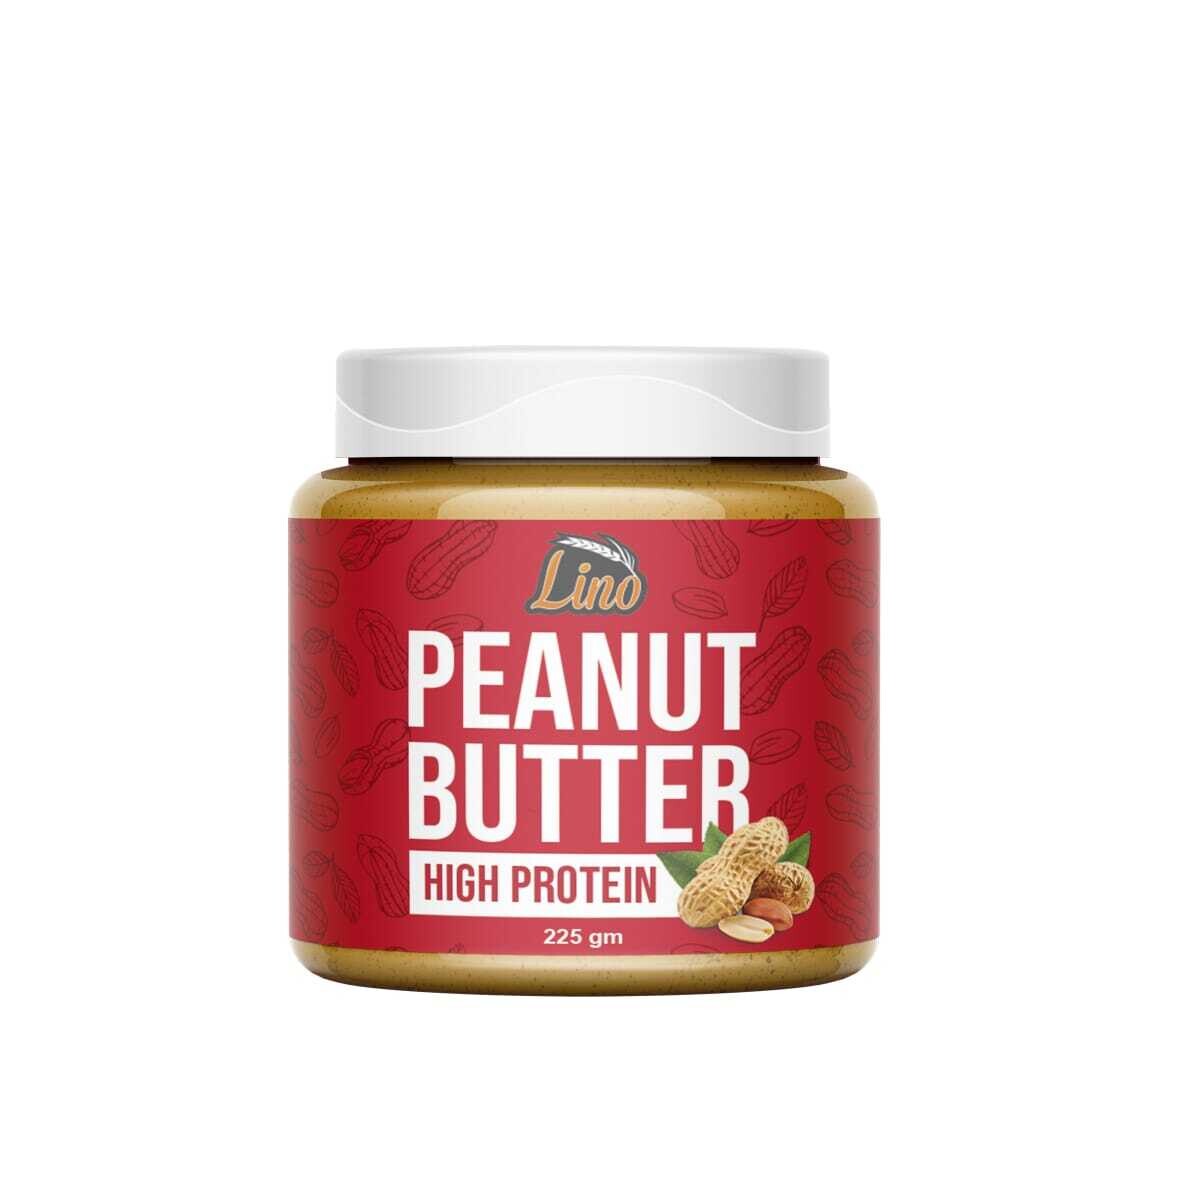 Lino Peanut butter 340g High Protein